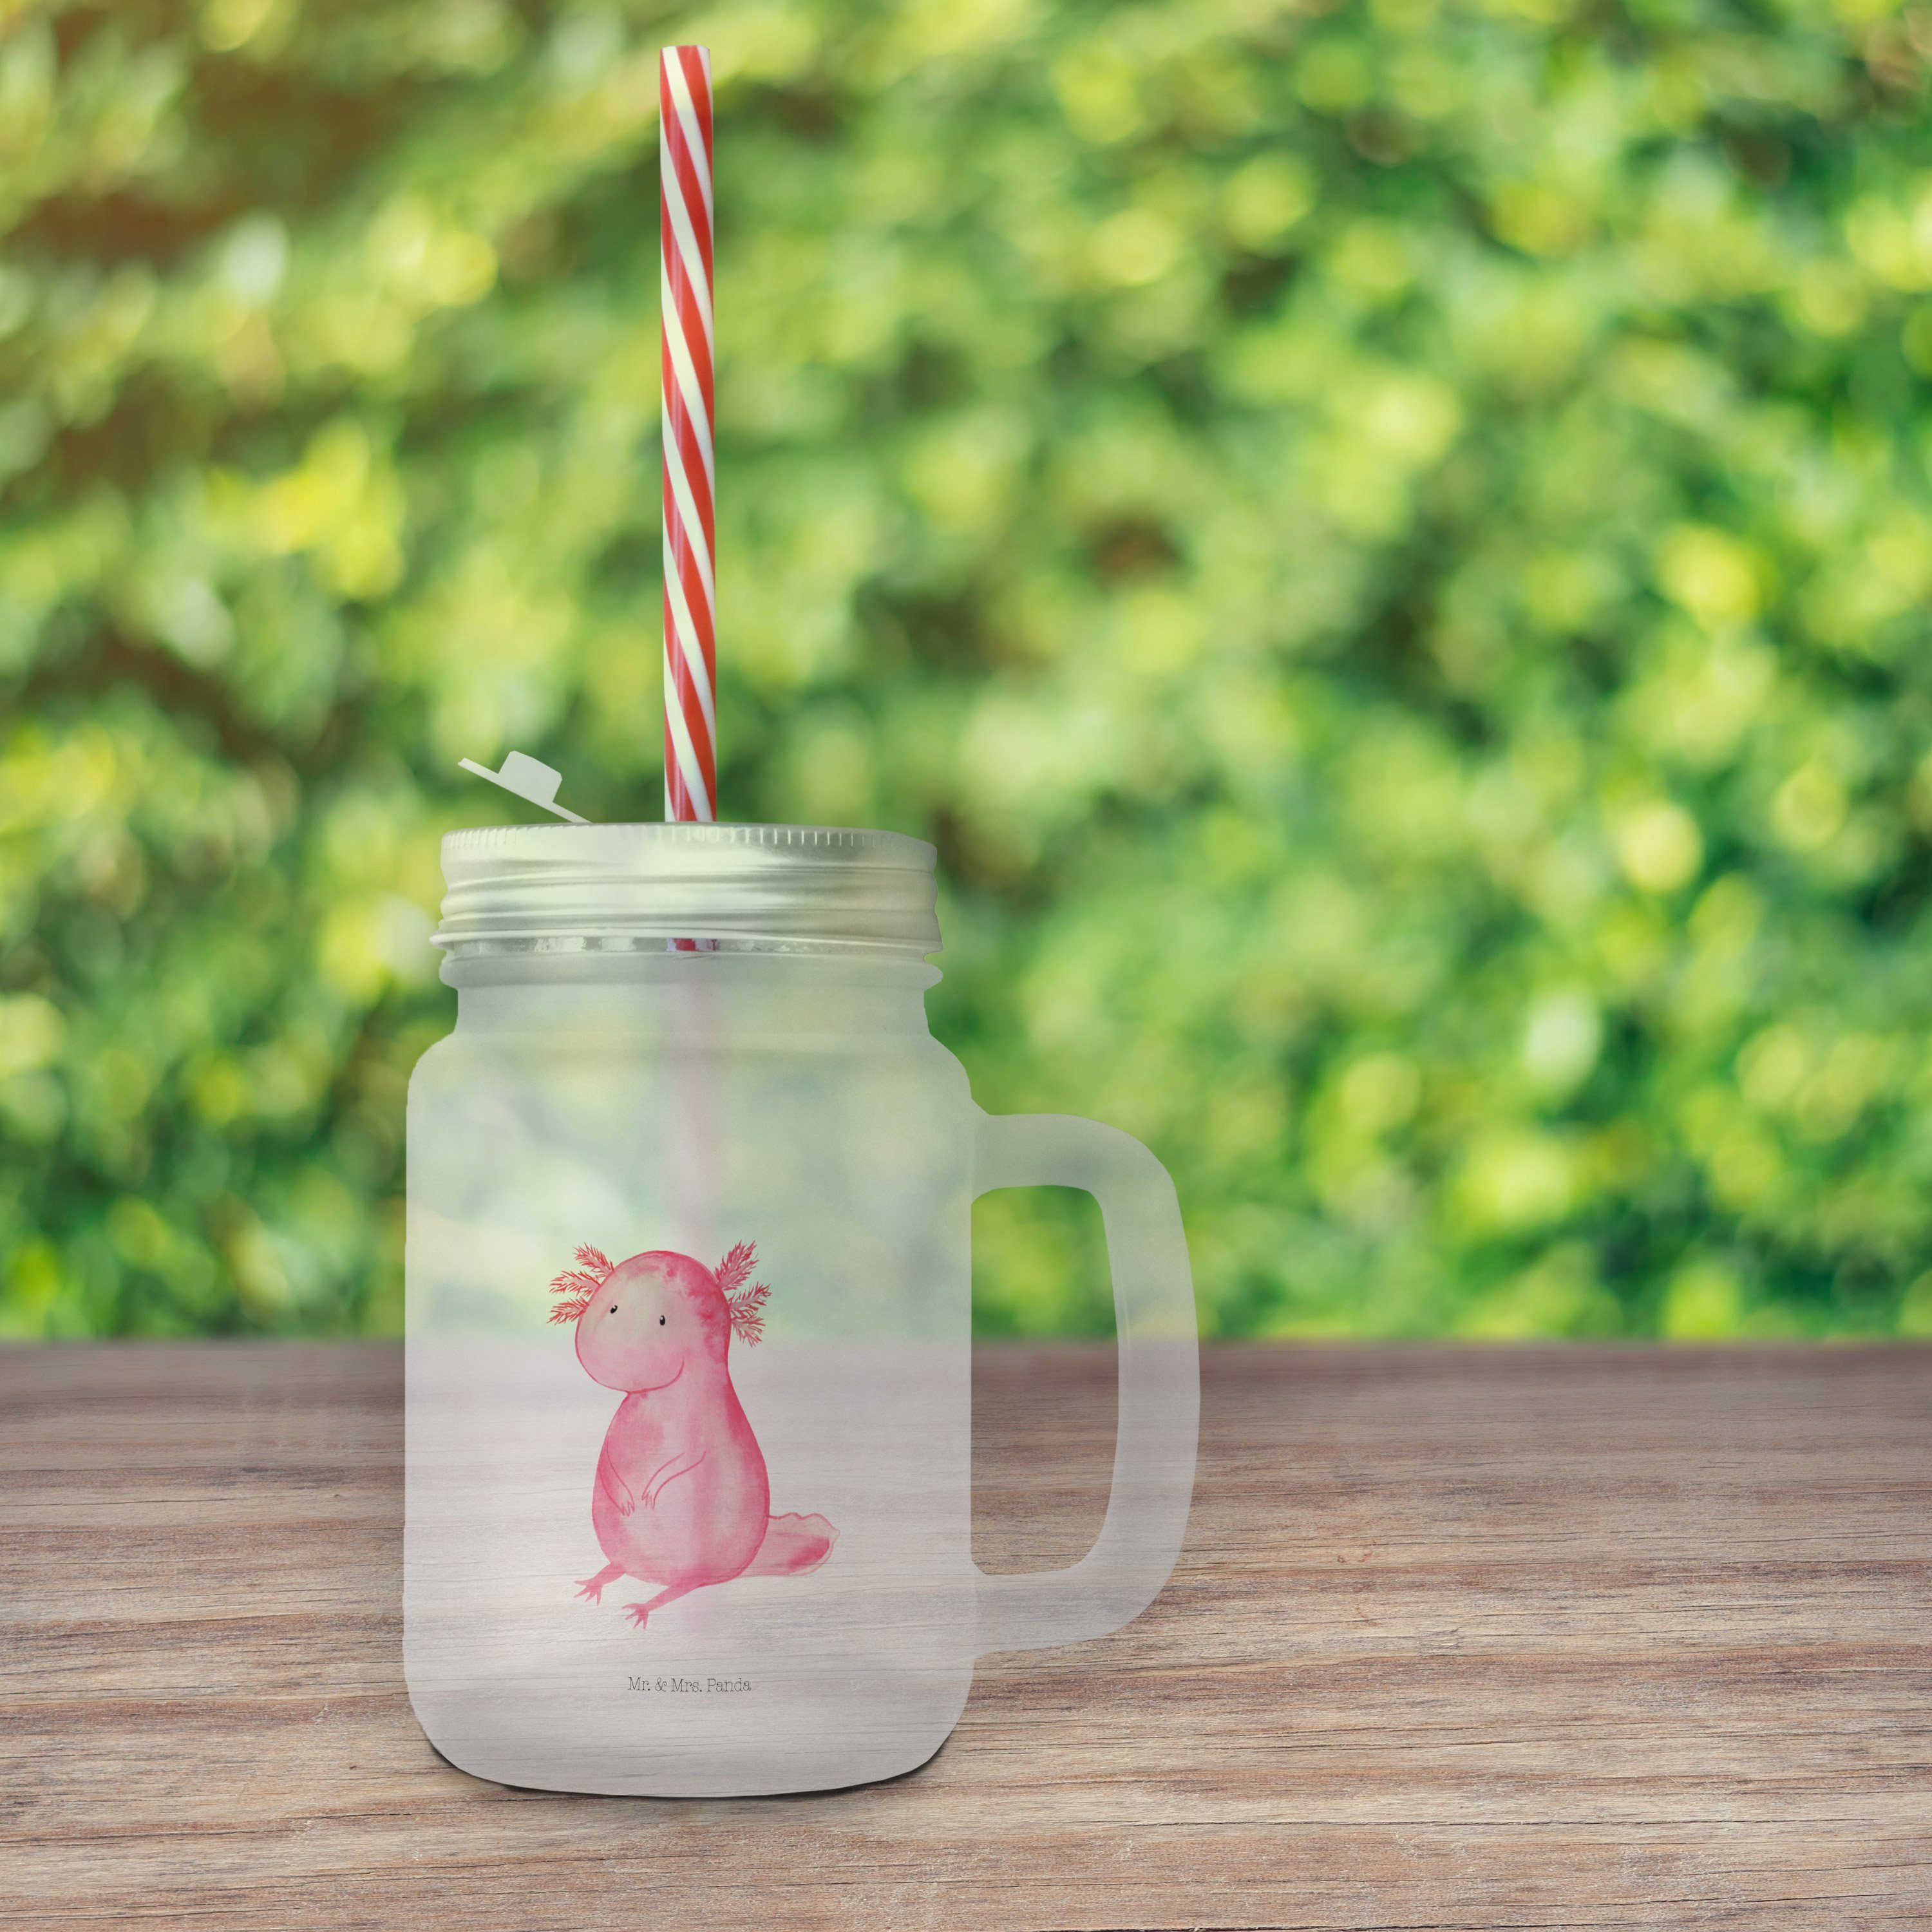 Mr. & Mrs. Panda - Glas Molch, Transparent Axolotl Glas, Jar, Geschenk, Glas Sommerparty, Mason - Premium